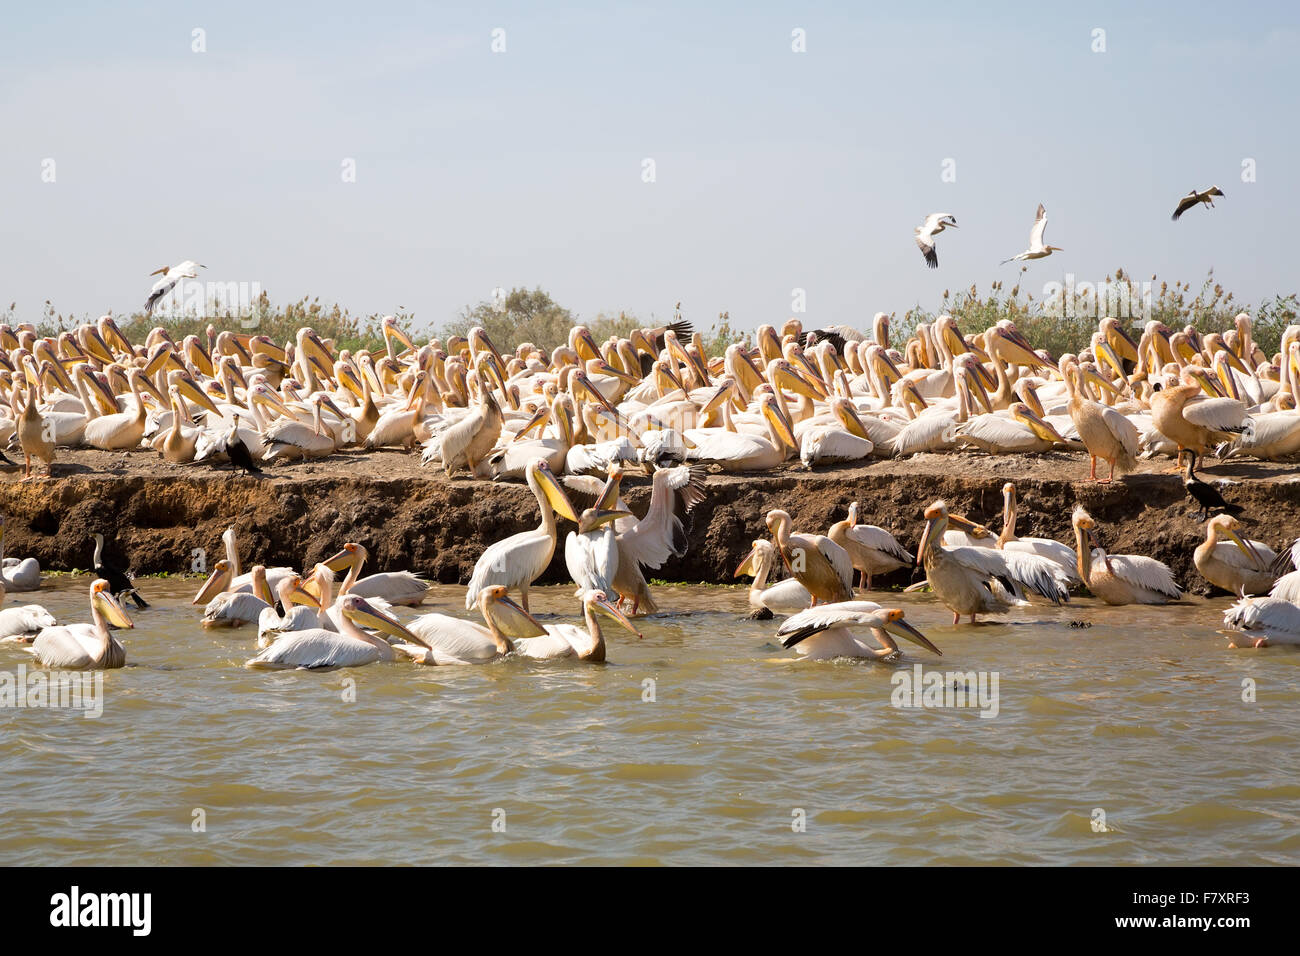 Djoudj National Bird Sanctuary, Saint Louis, in Senegal with 400 Stock Photo: 90943639 - Alamy